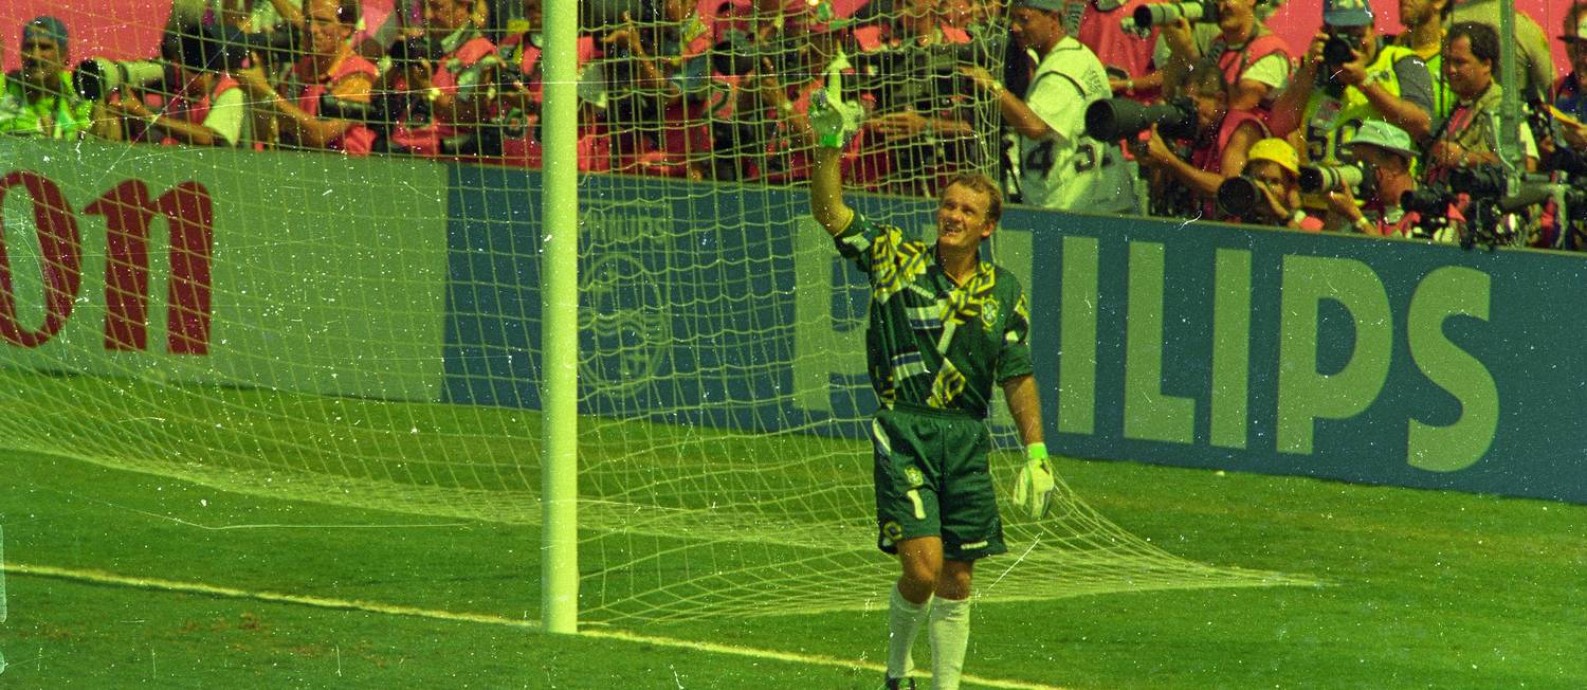 Os 25 anos da Copa de 94] O que pensava Romário antes da final